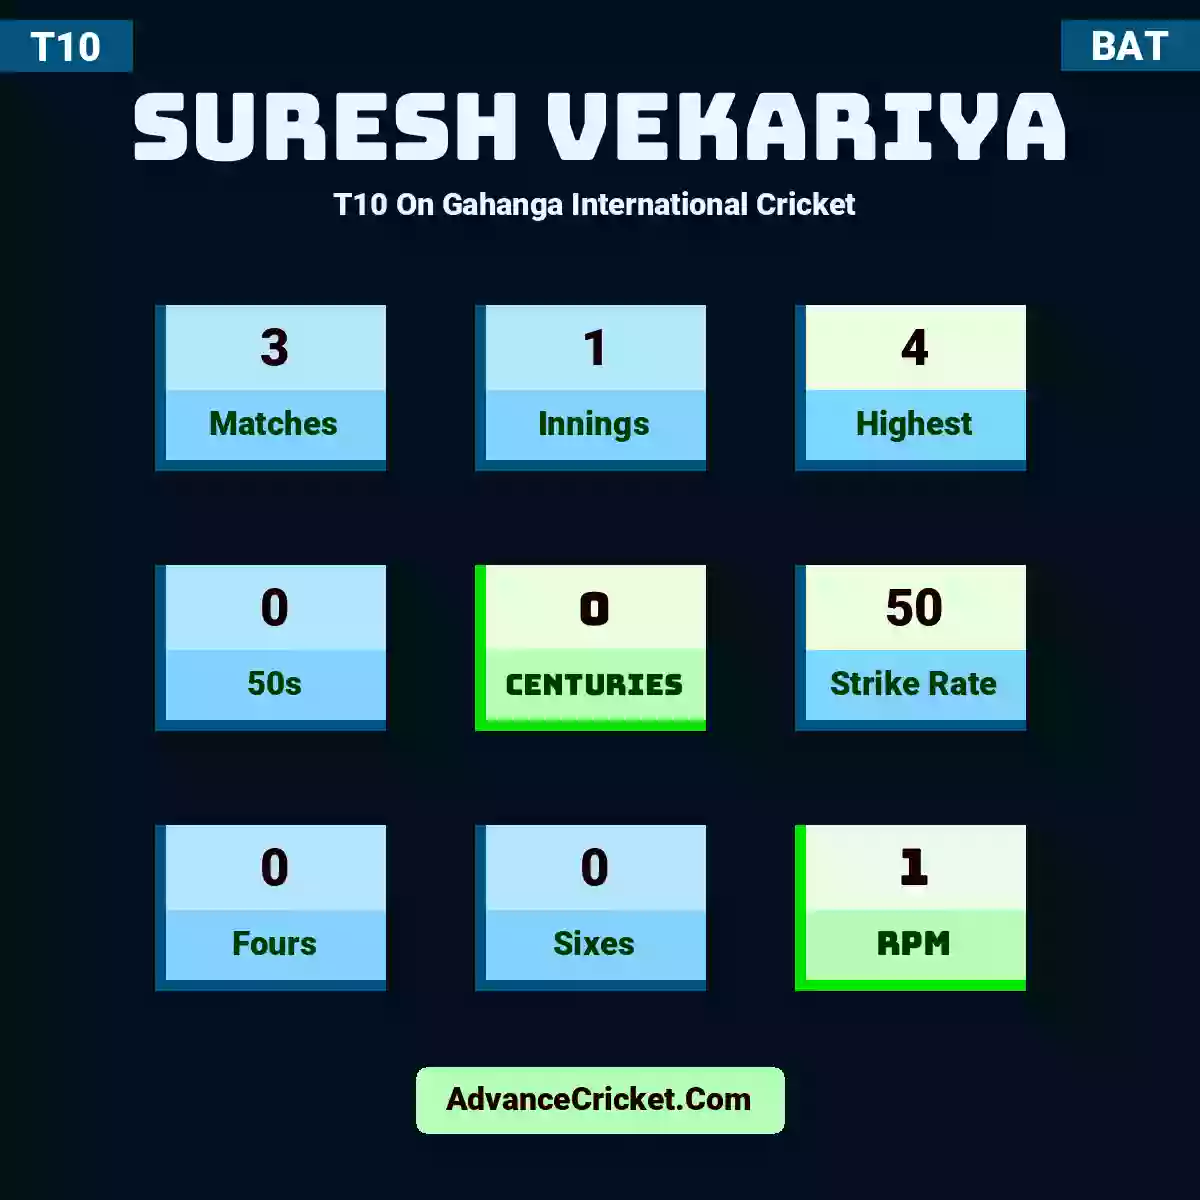 Suresh Vekariya T10  On Gahanga International Cricket , Suresh Vekariya played 3 matches, scored 4 runs as highest, 0 half-centuries, and 0 centuries, with a strike rate of 50. S.Vekariya hit 0 fours and 0 sixes, with an RPM of 1.